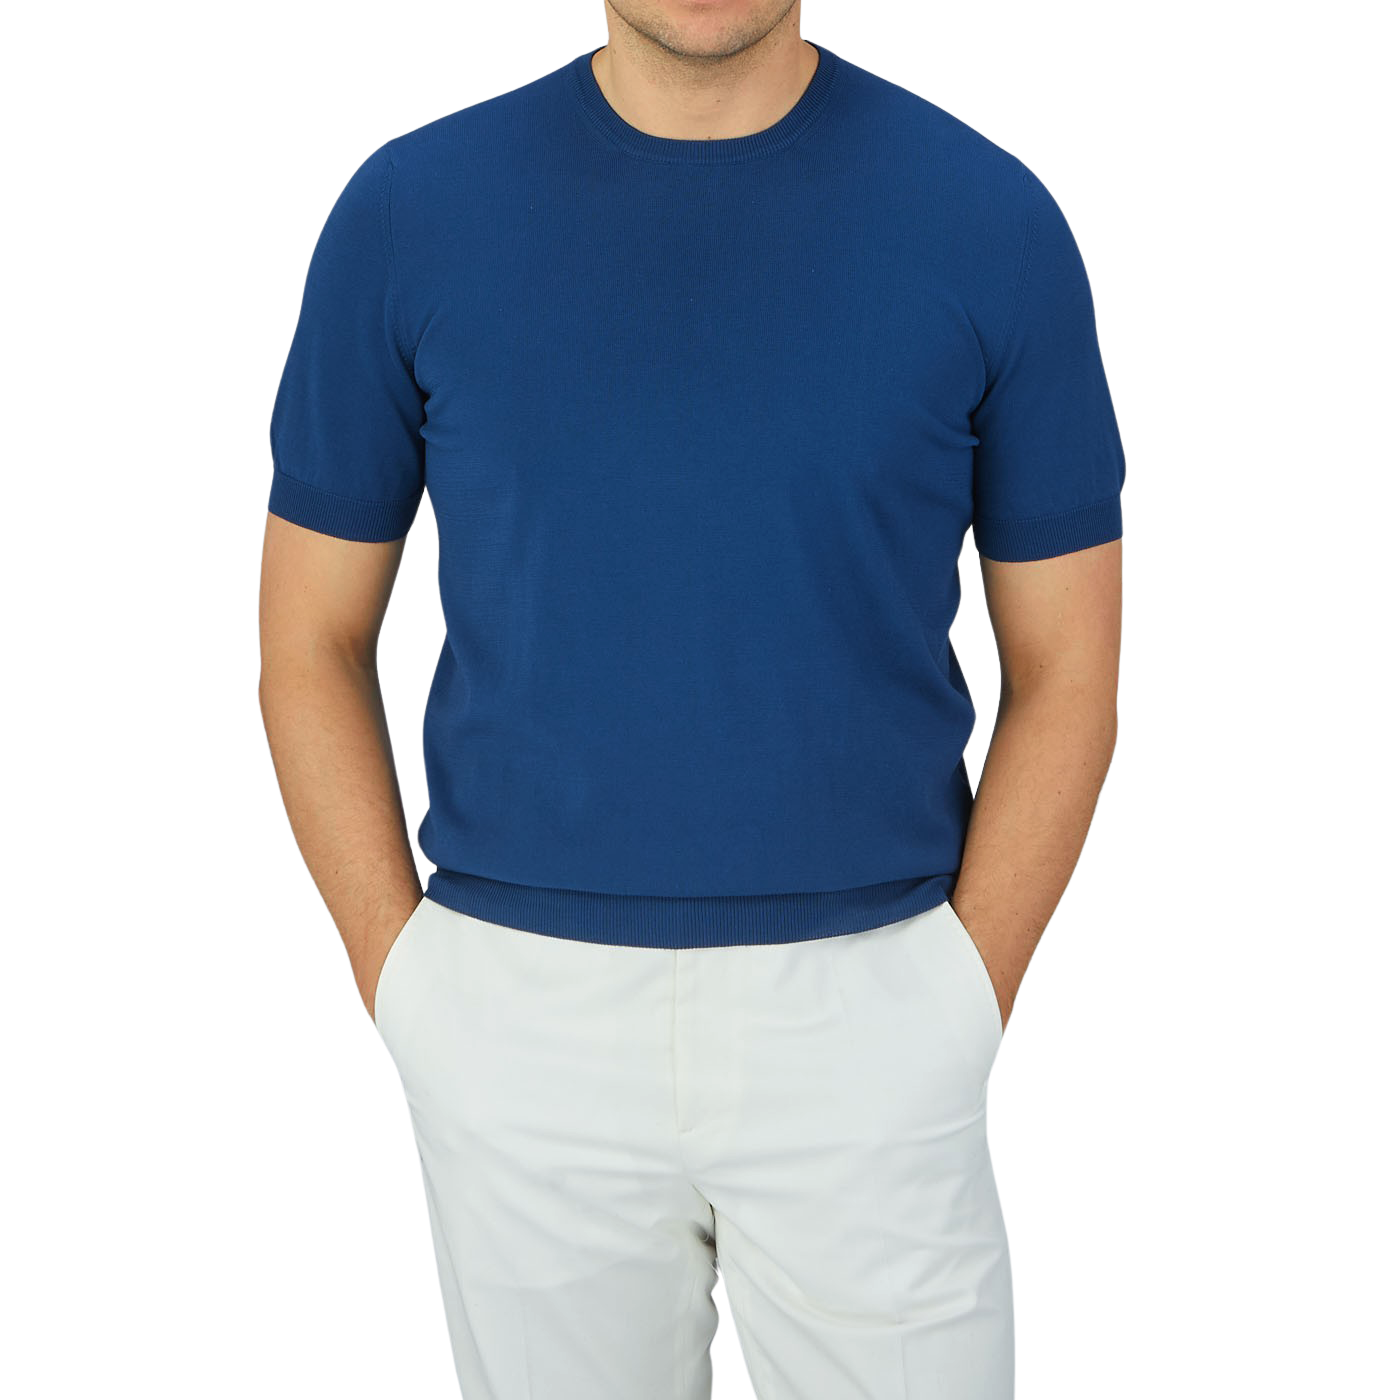 A man wearing a lightweight Indigo Blue Knitted Organic Cotton T-Shirt by Gran Sasso.